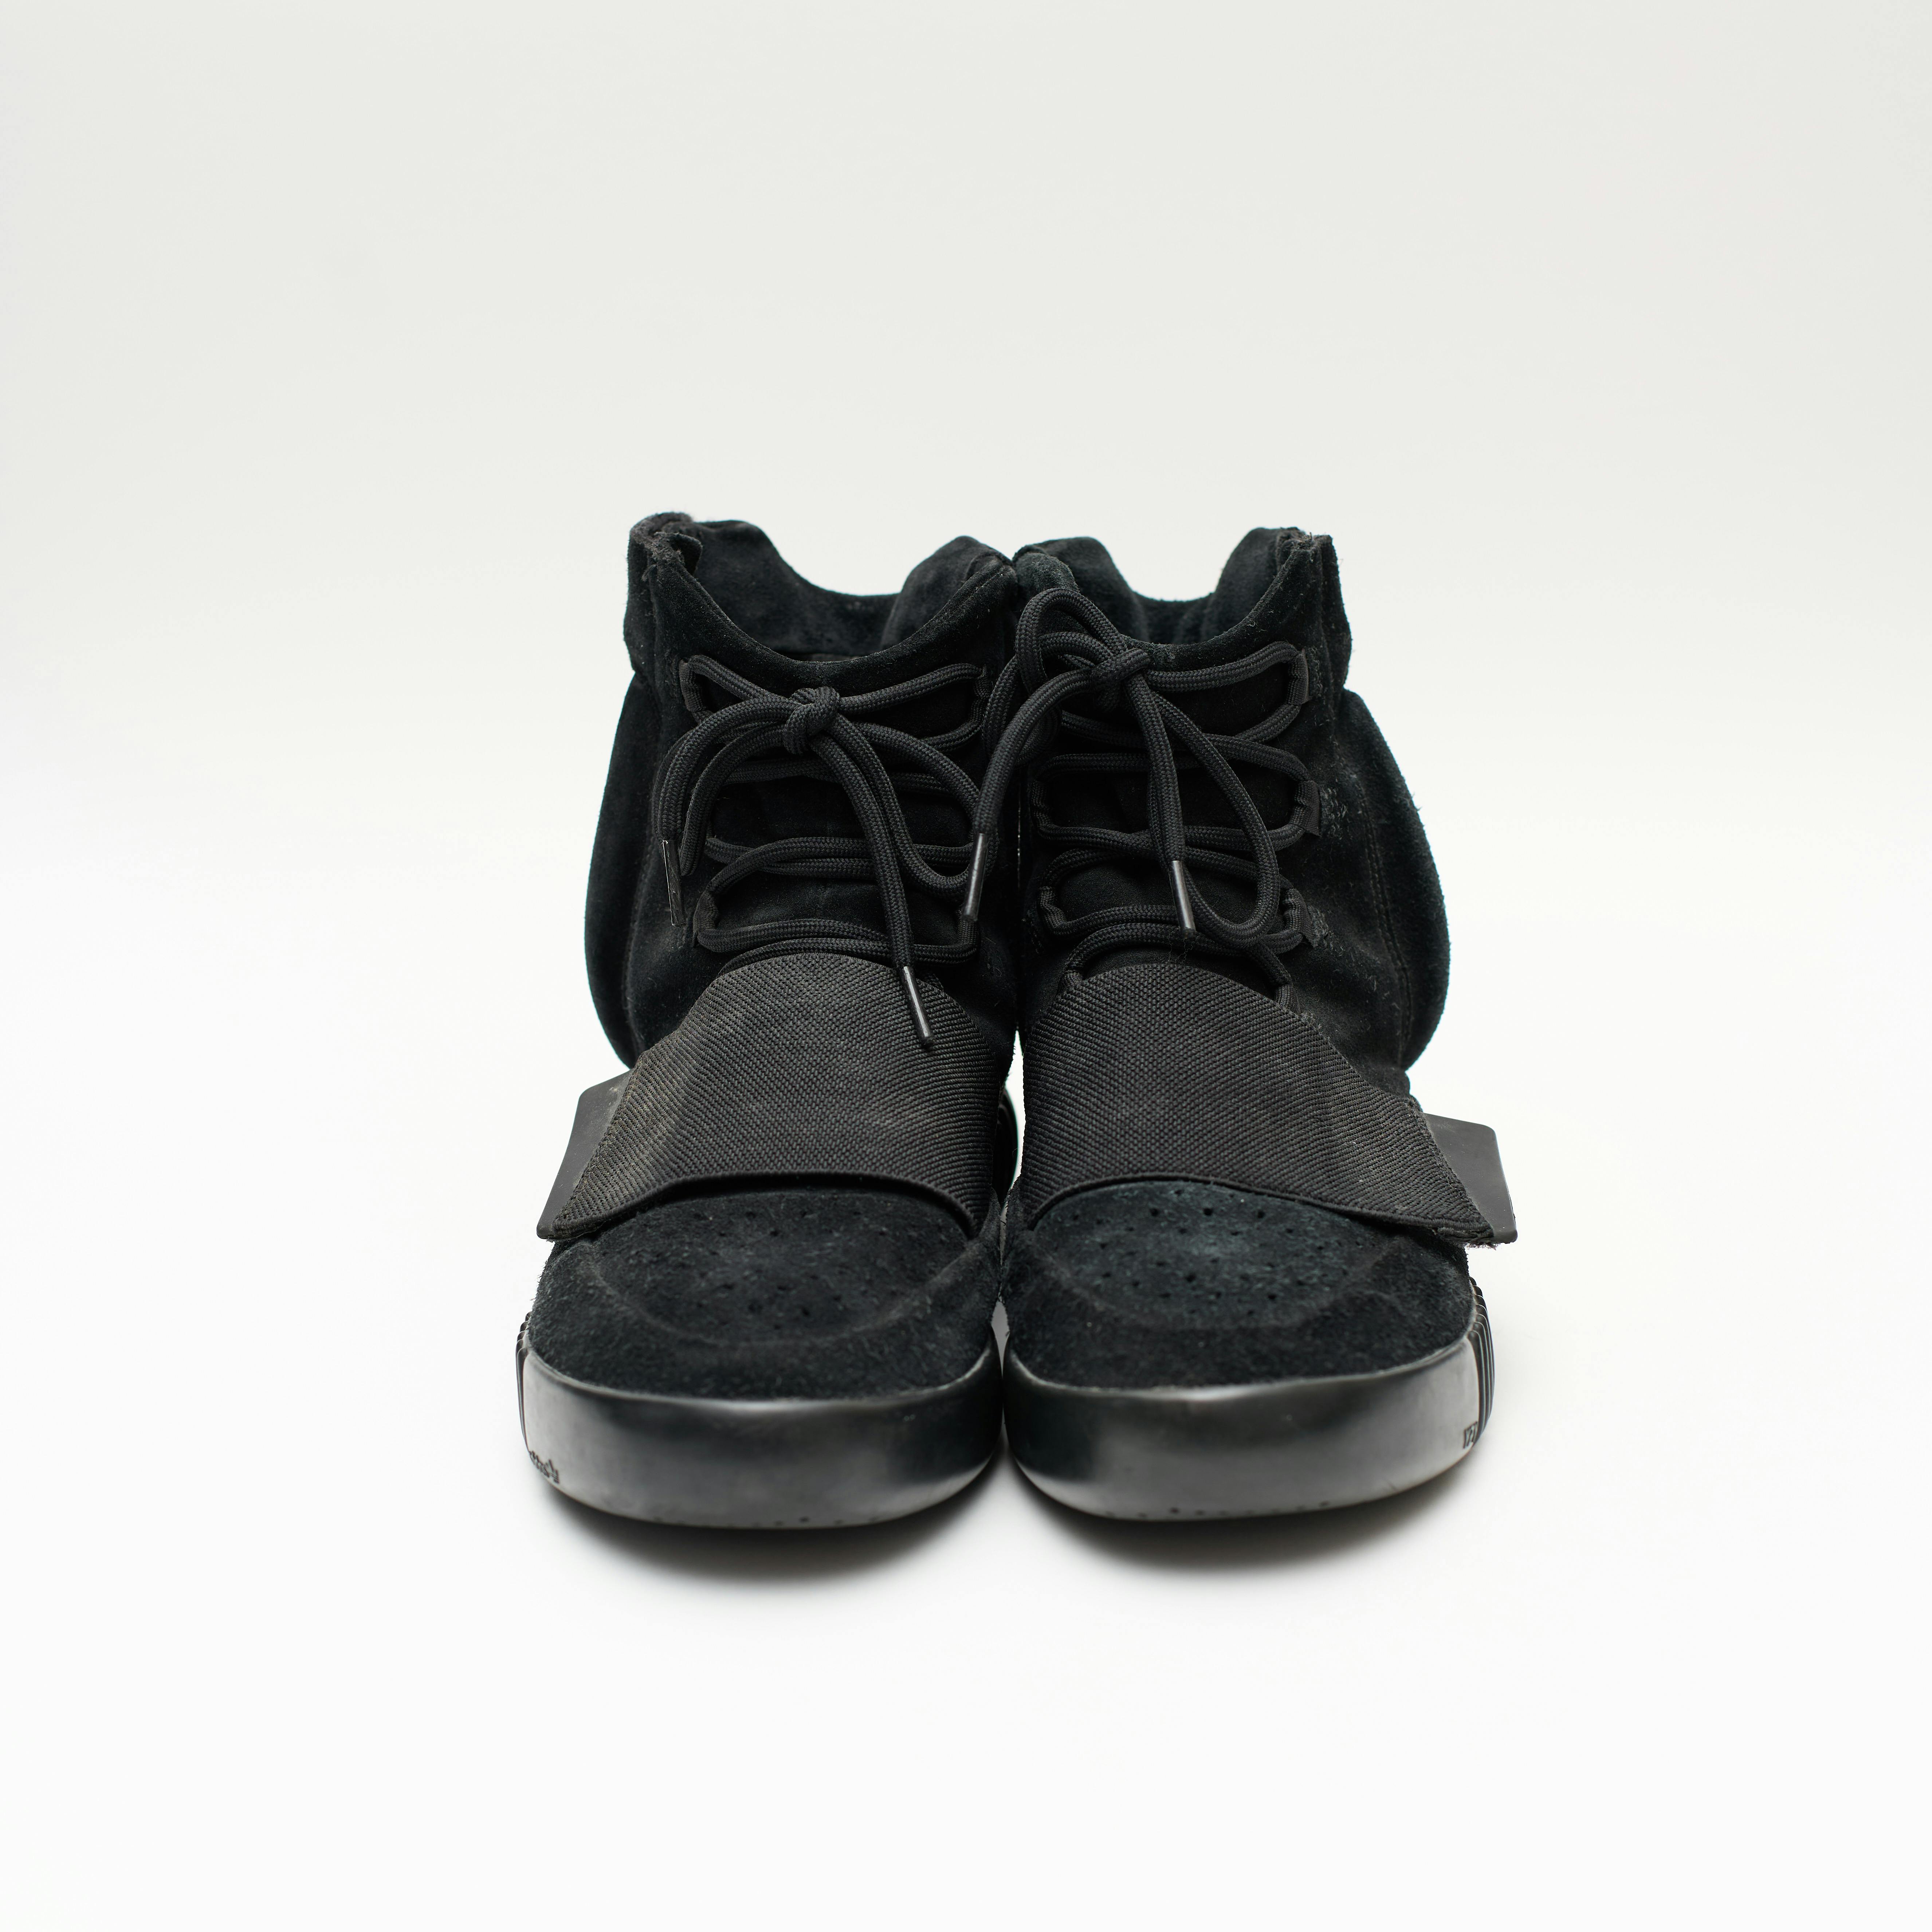 Adidas Yeezy Boost 750 Triple Black Size 10 - 3